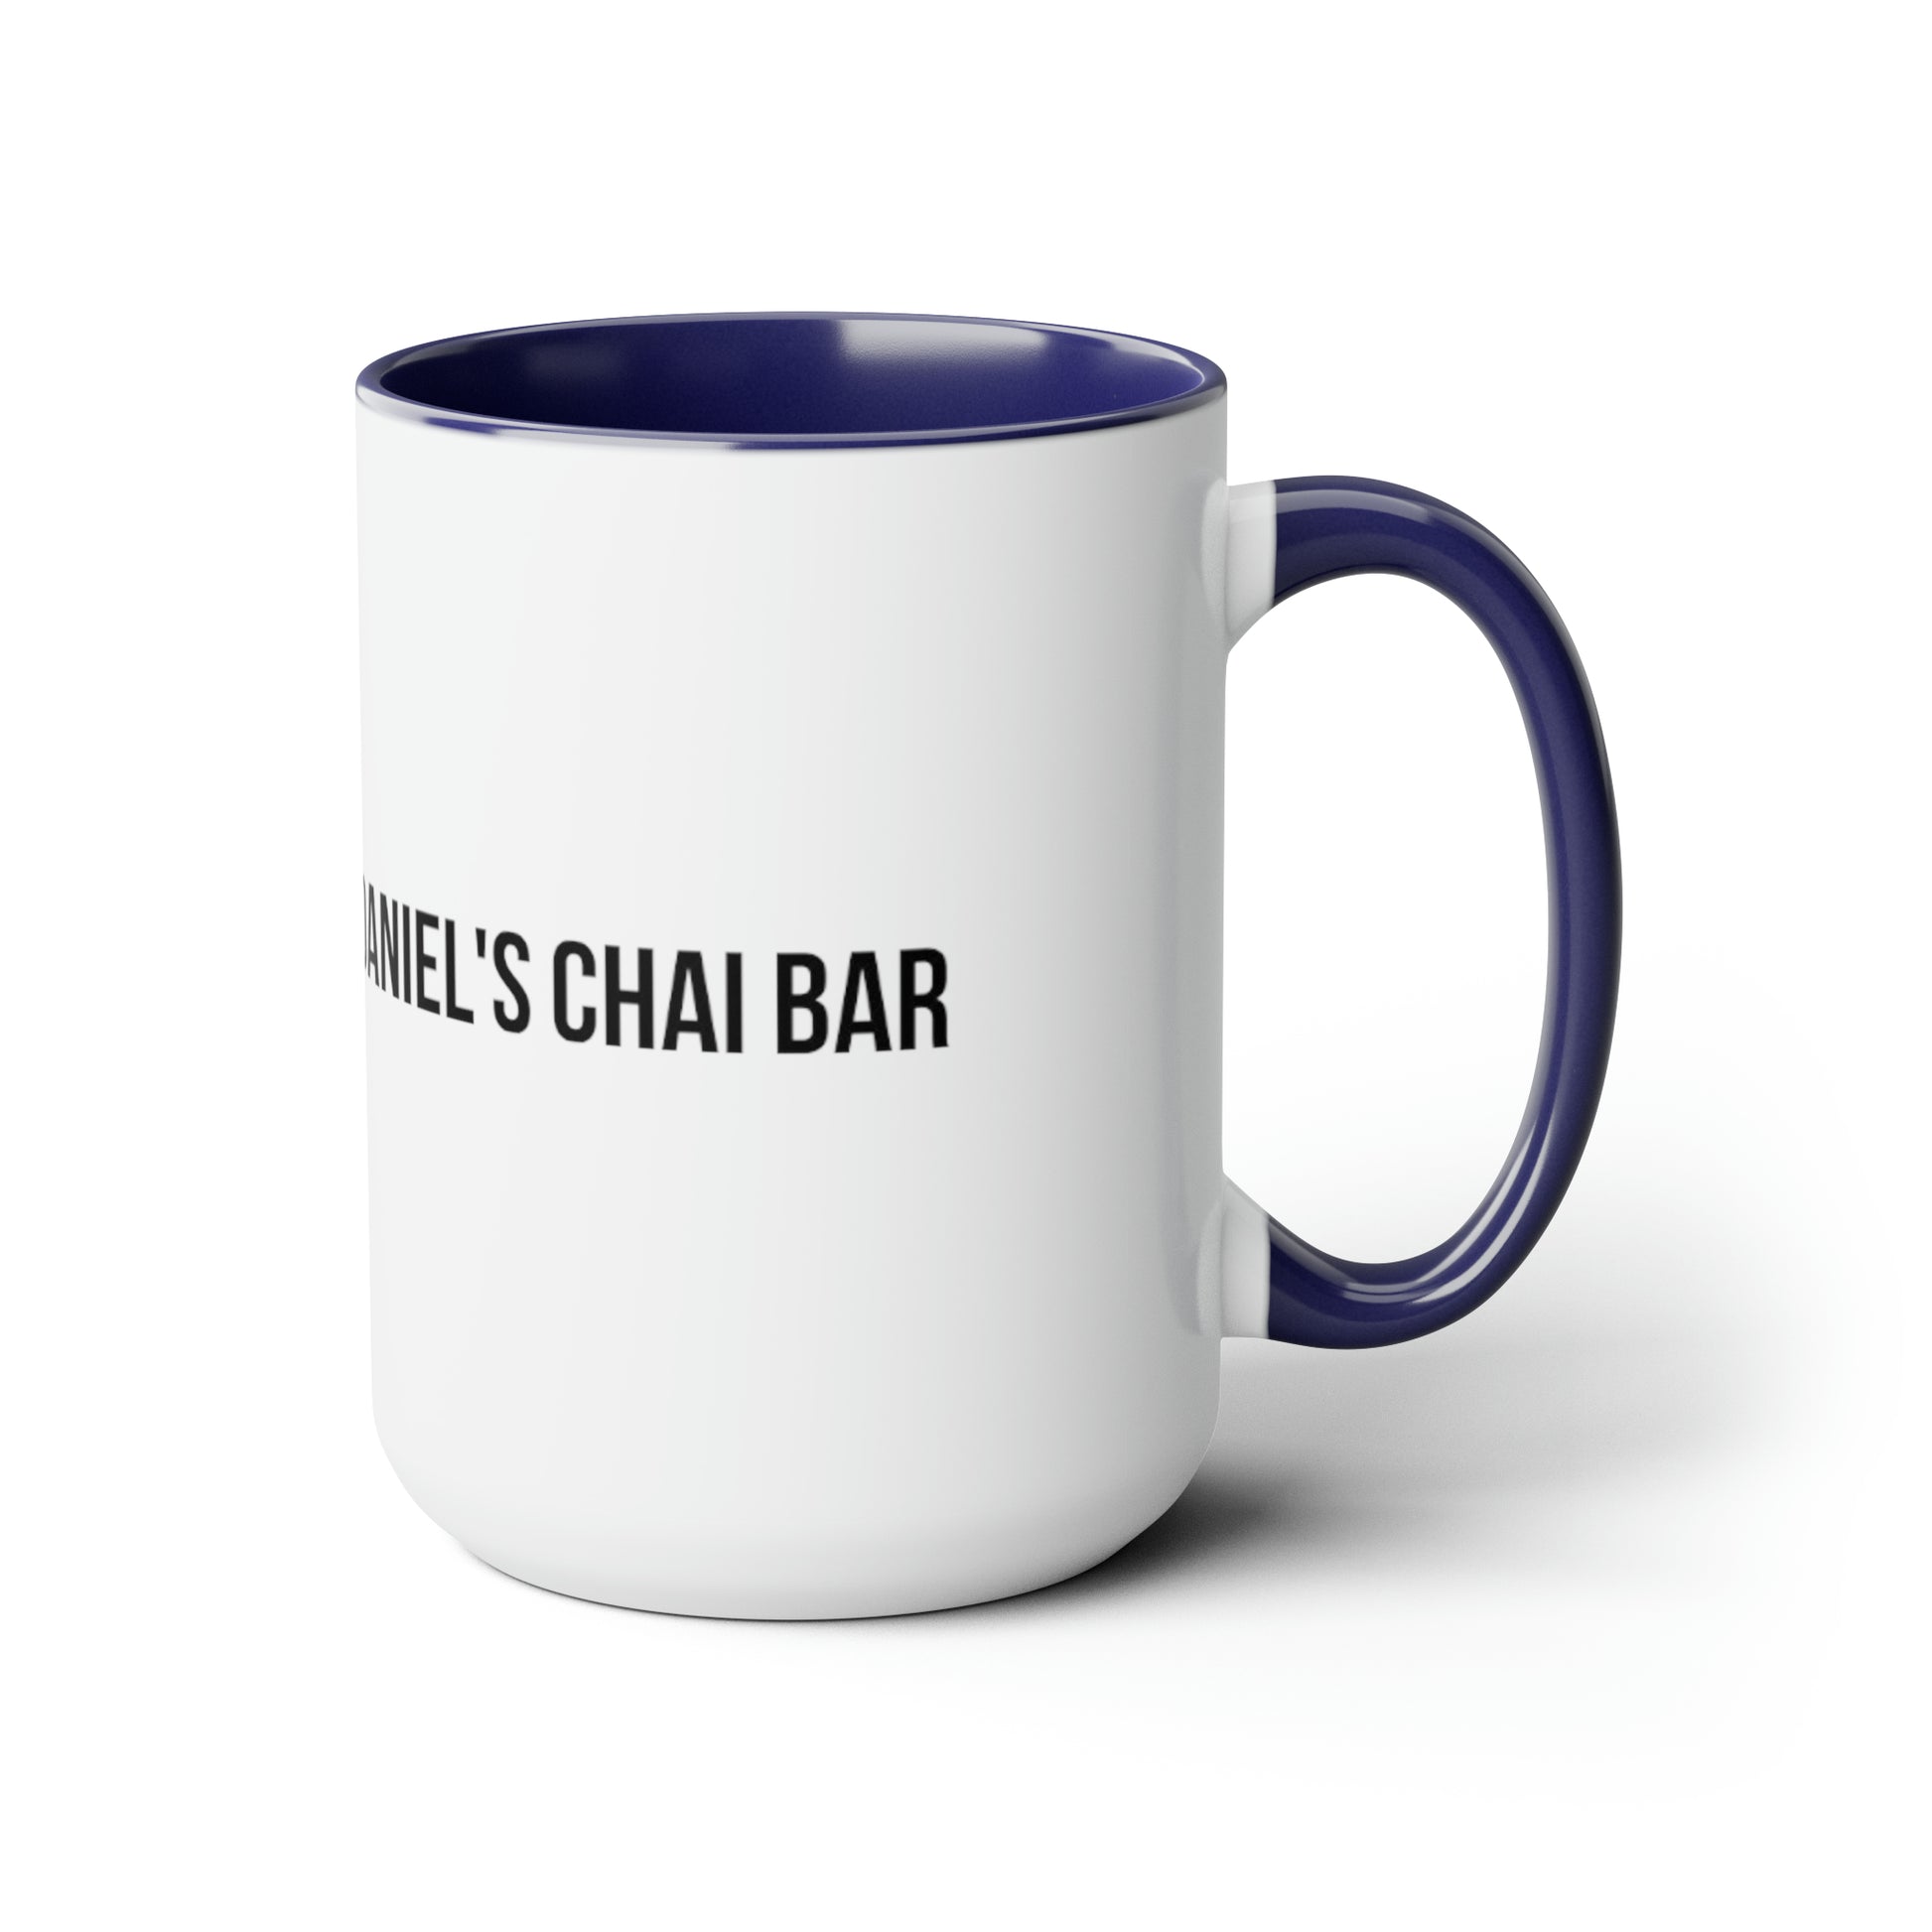 Lion - Two-Tone Coffee Mugs, 15oz - Daniel's Chai Bar